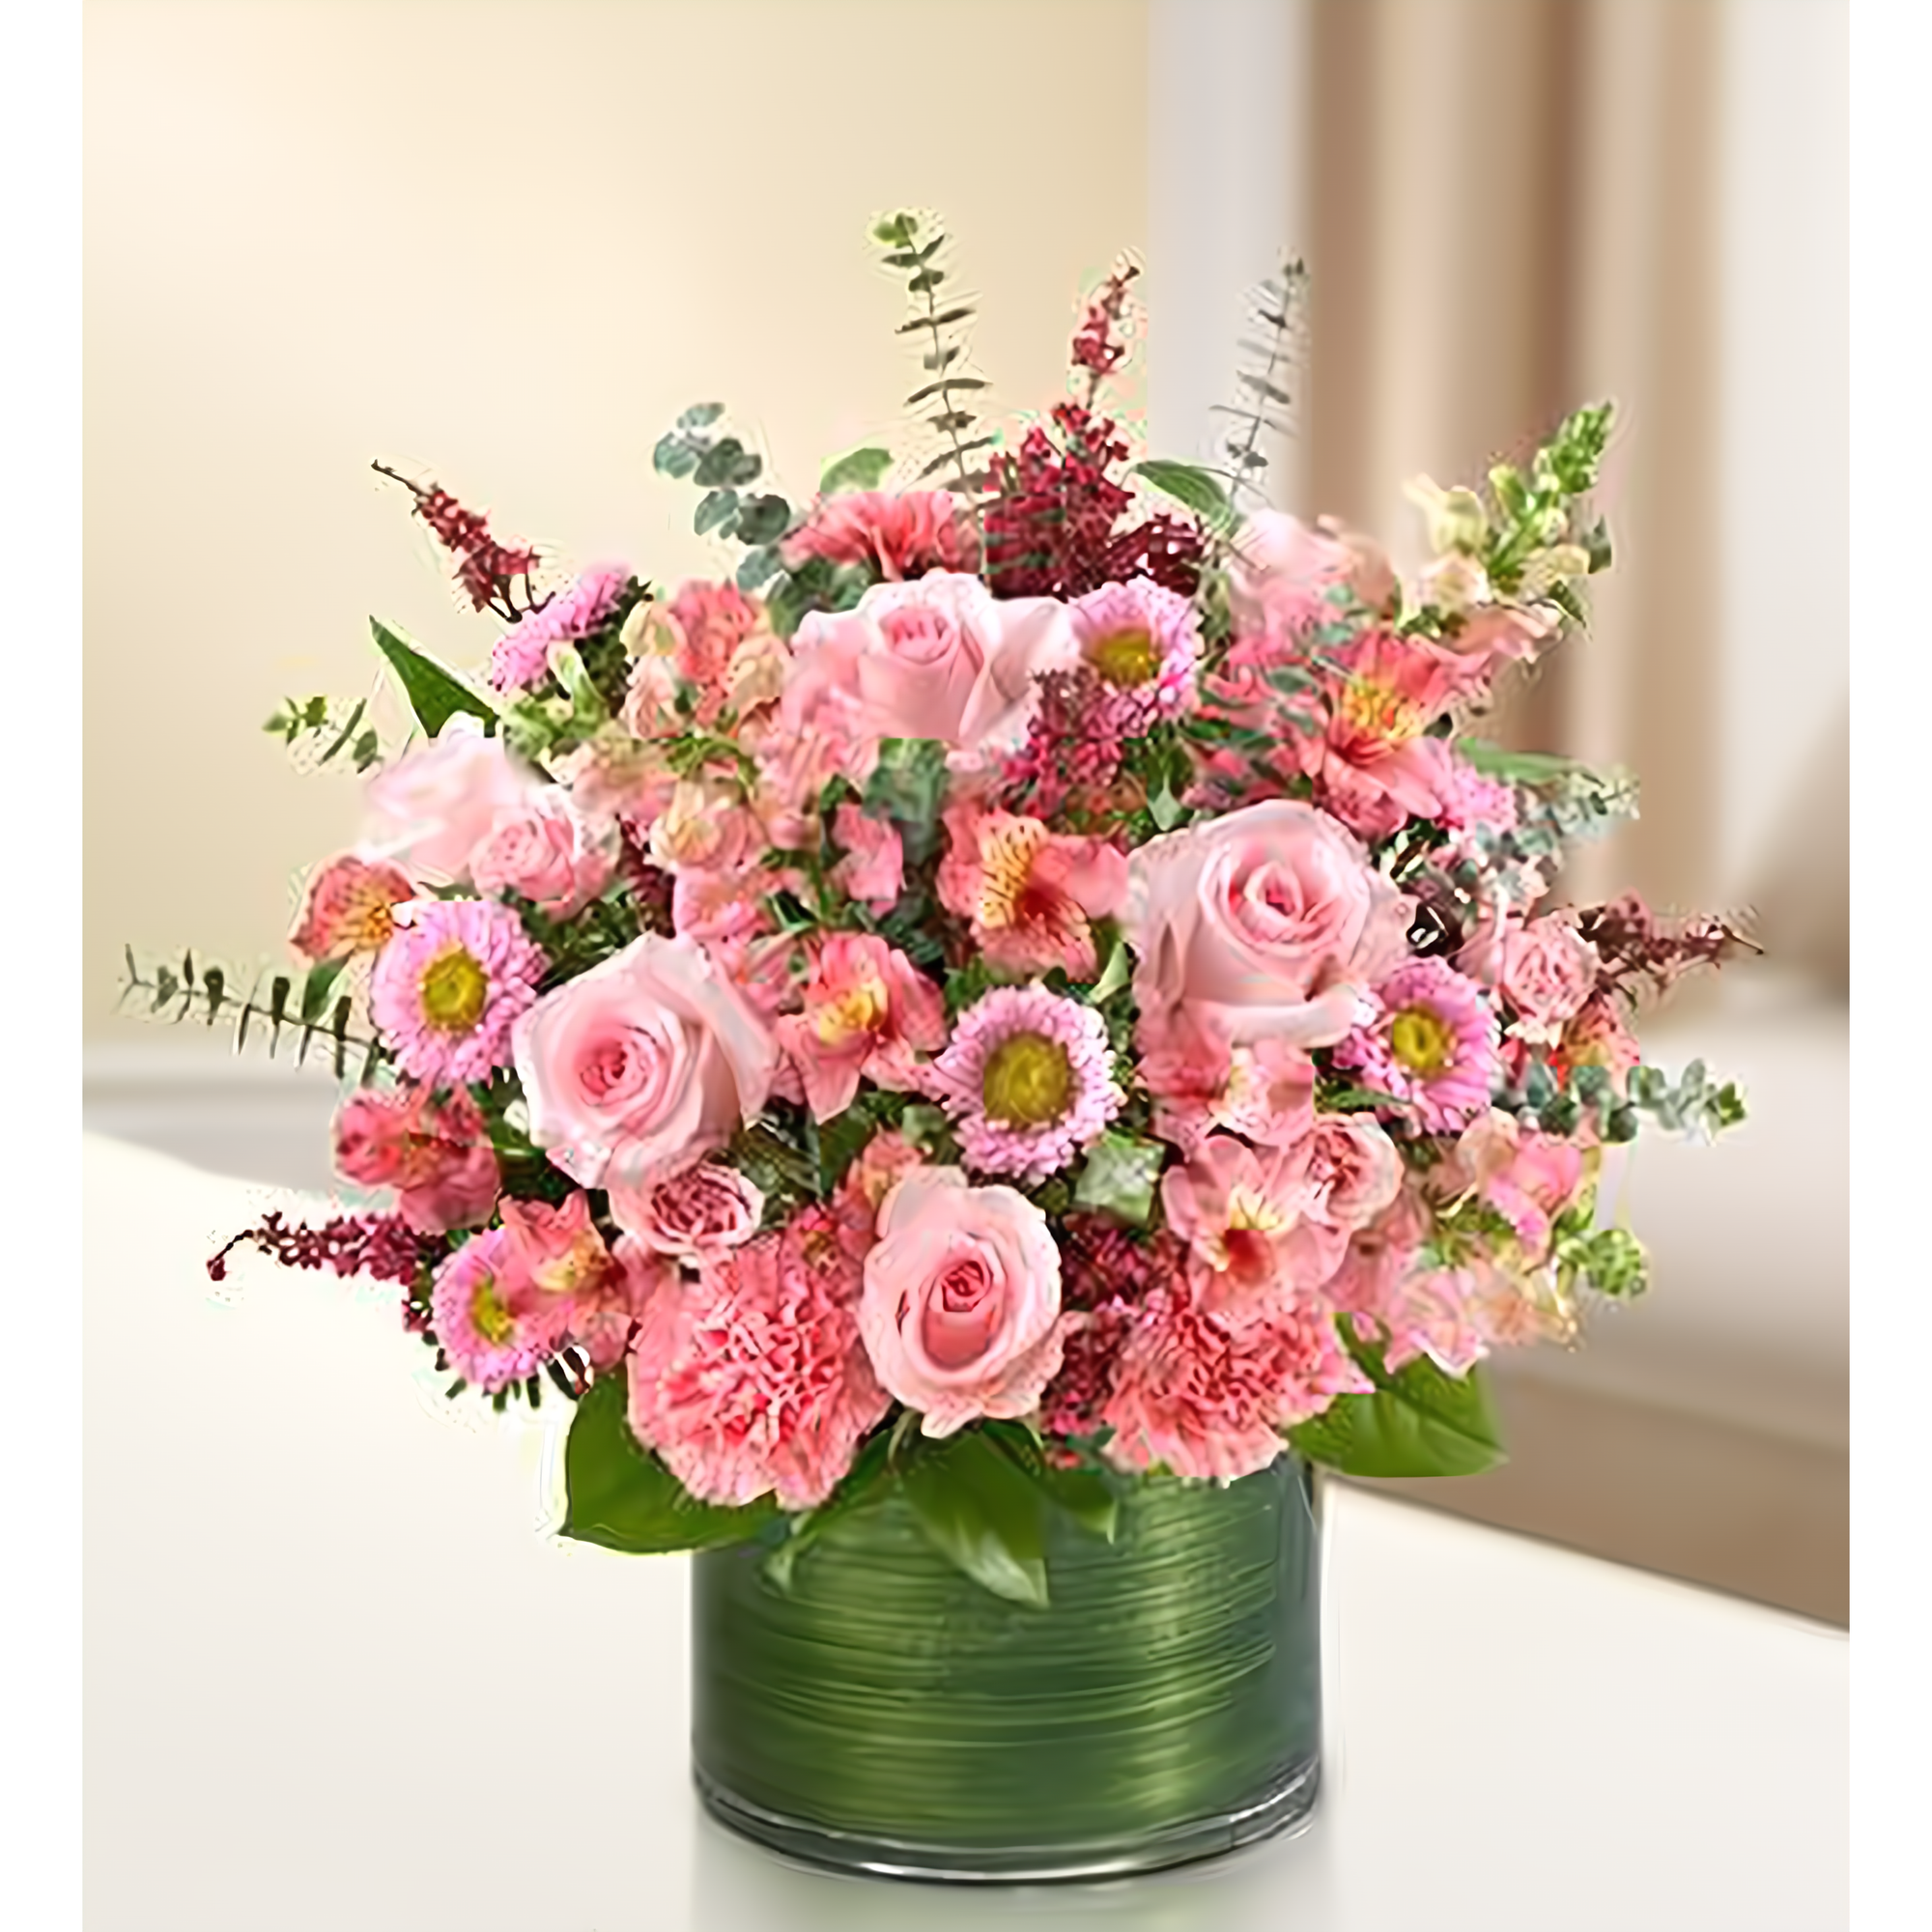 Manhattan Flower Delivery - Cherished Memories - All Pink - Funeral > Vase Arrangements